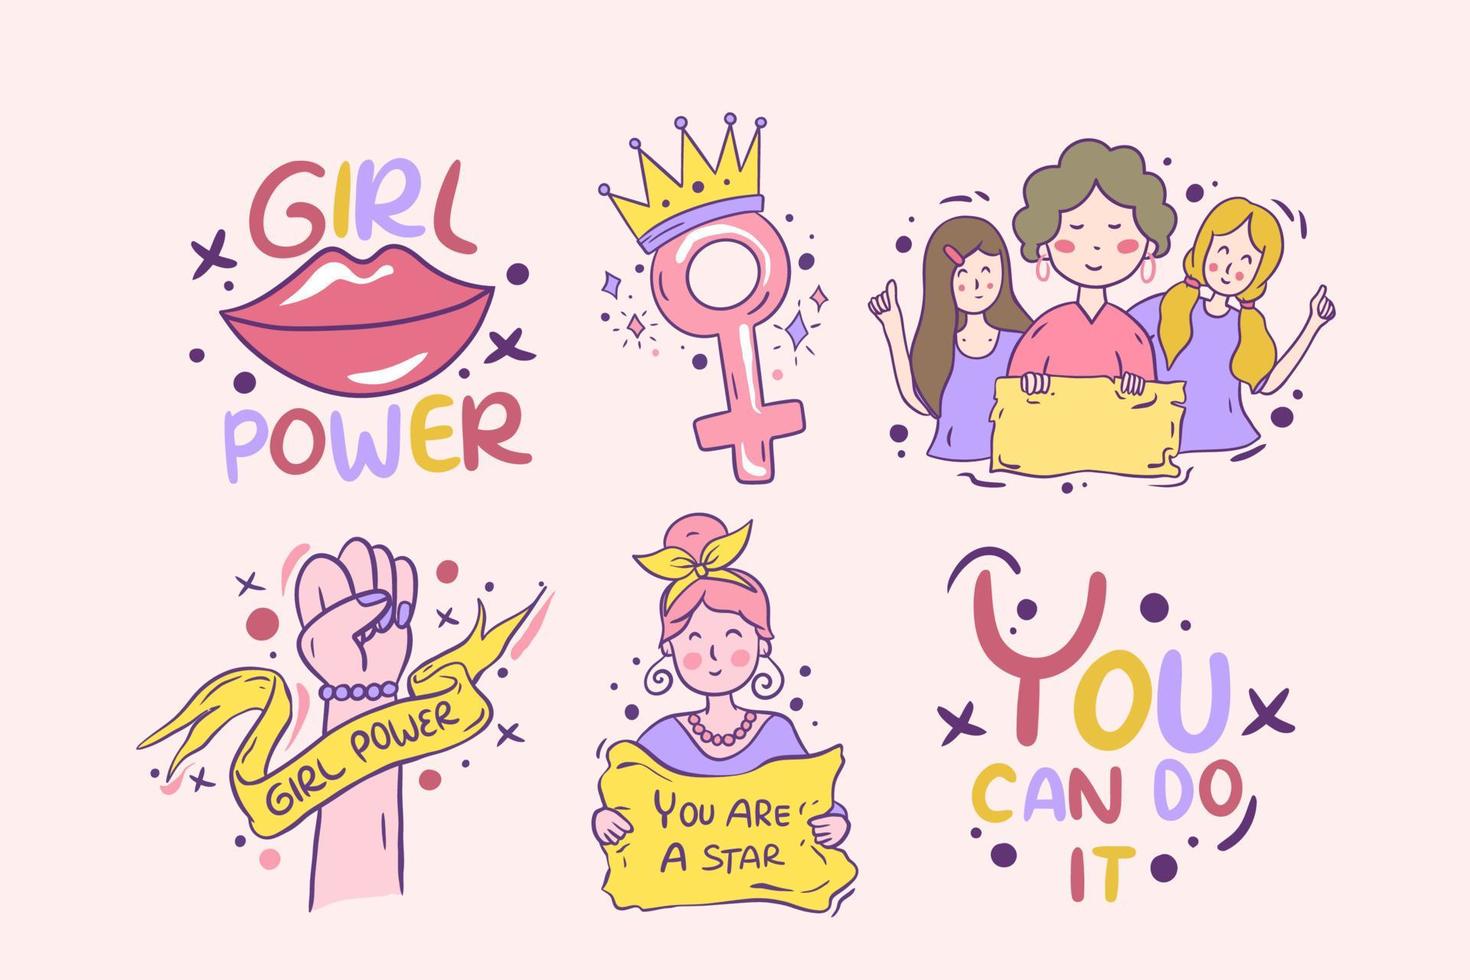 vector flat international women's day illustration